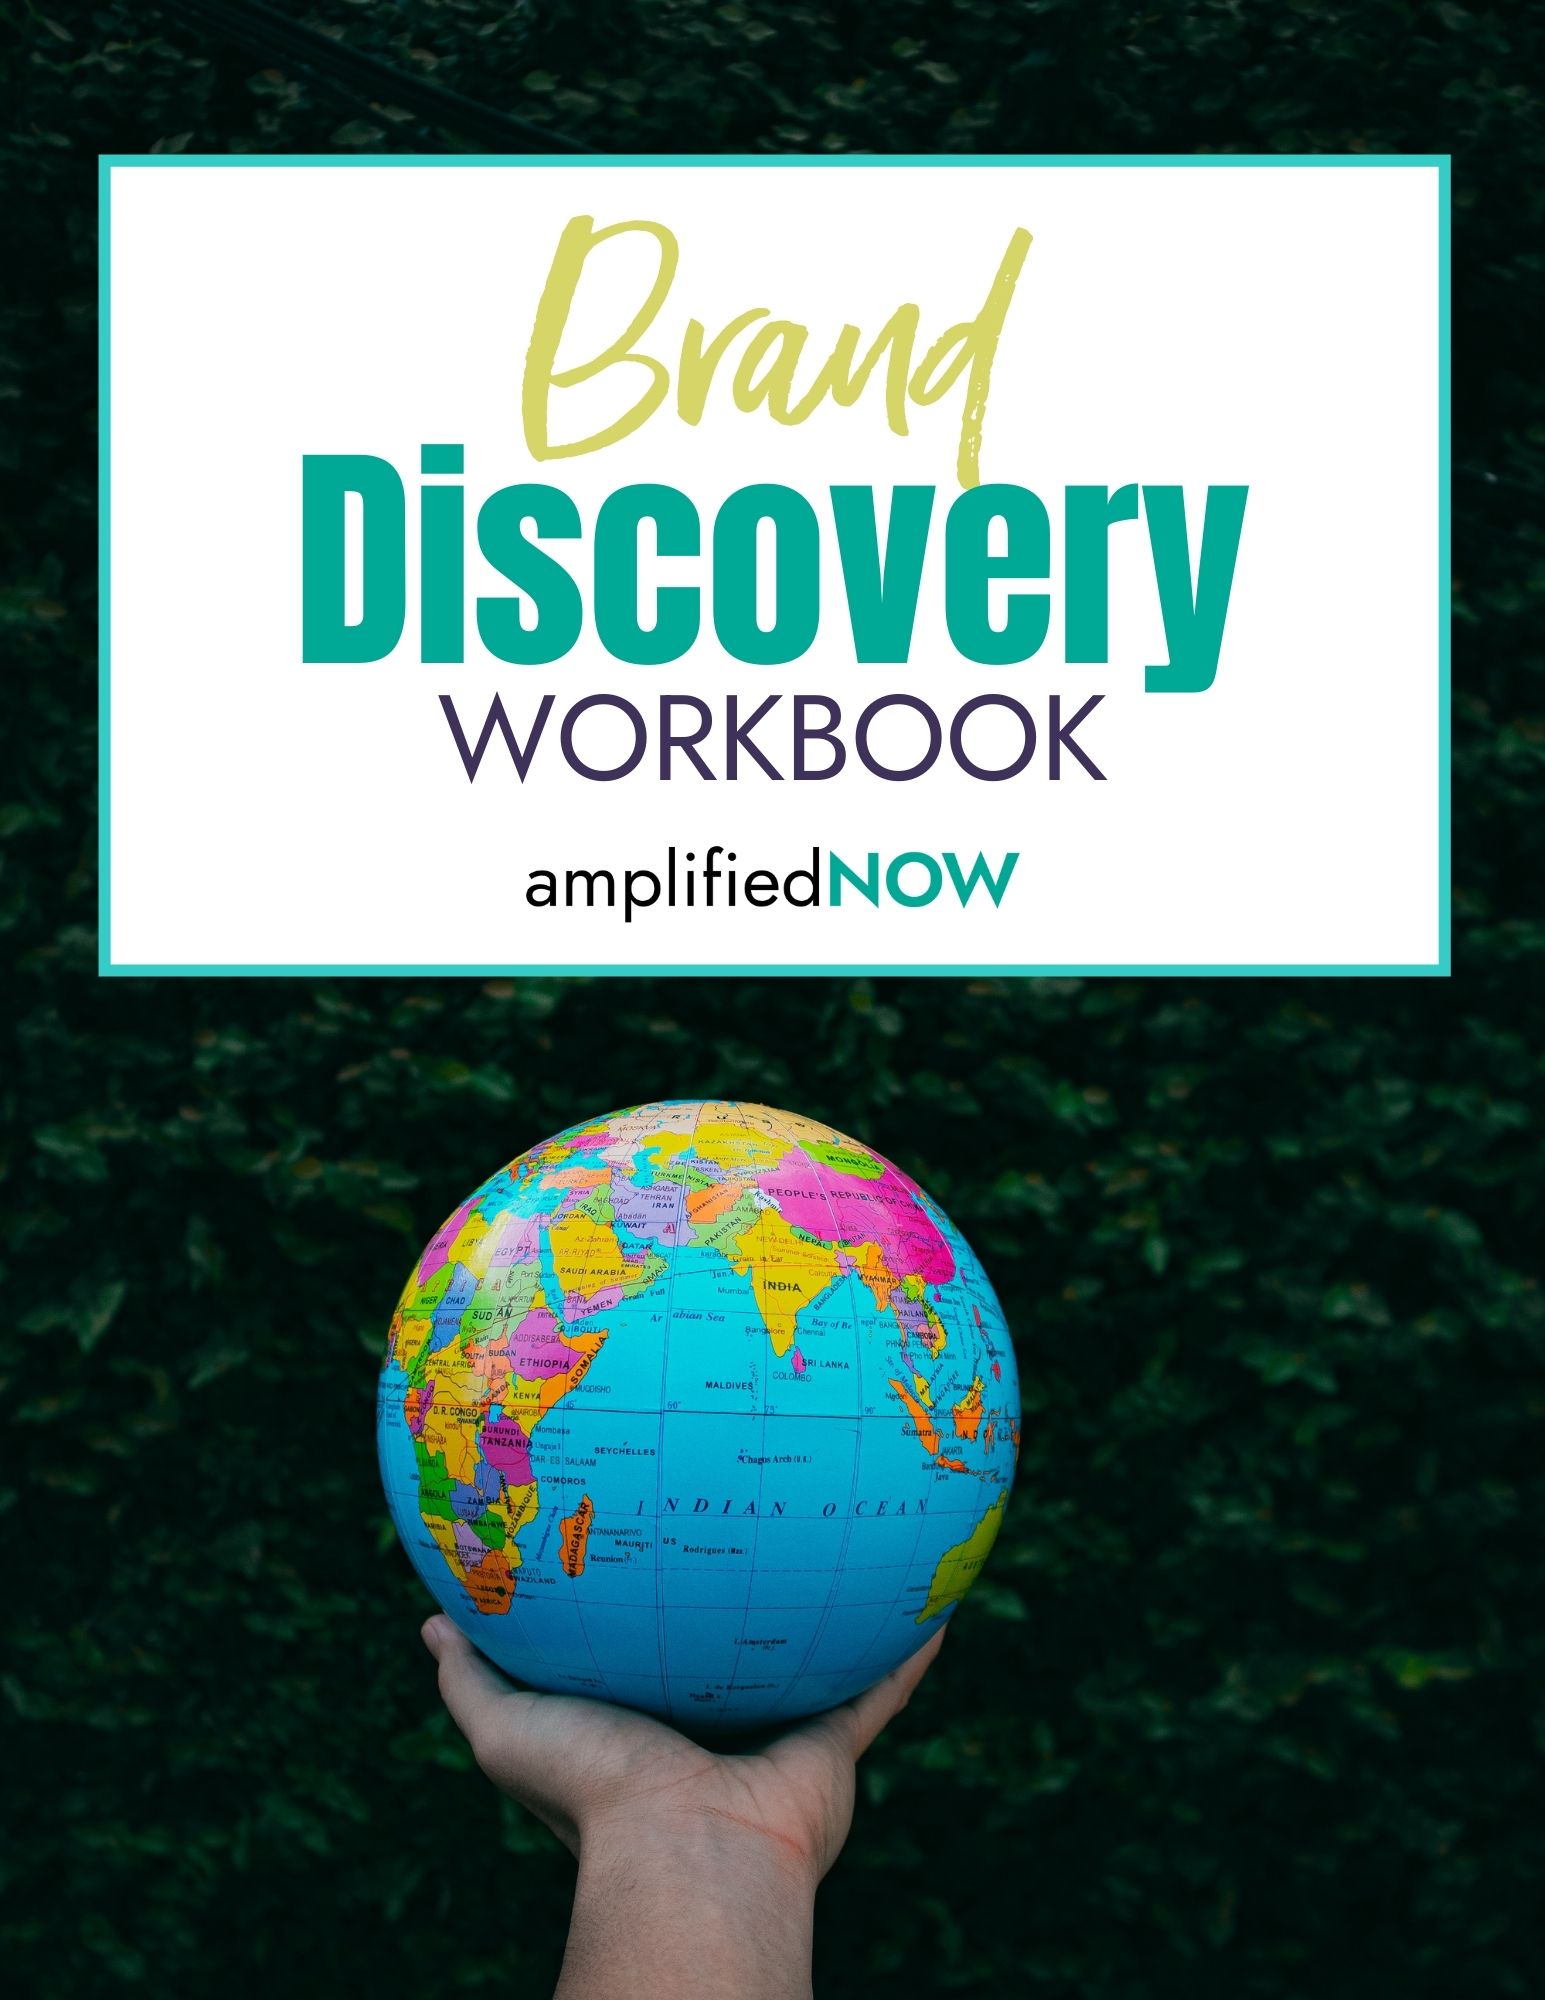 Brand Discovery Workbook